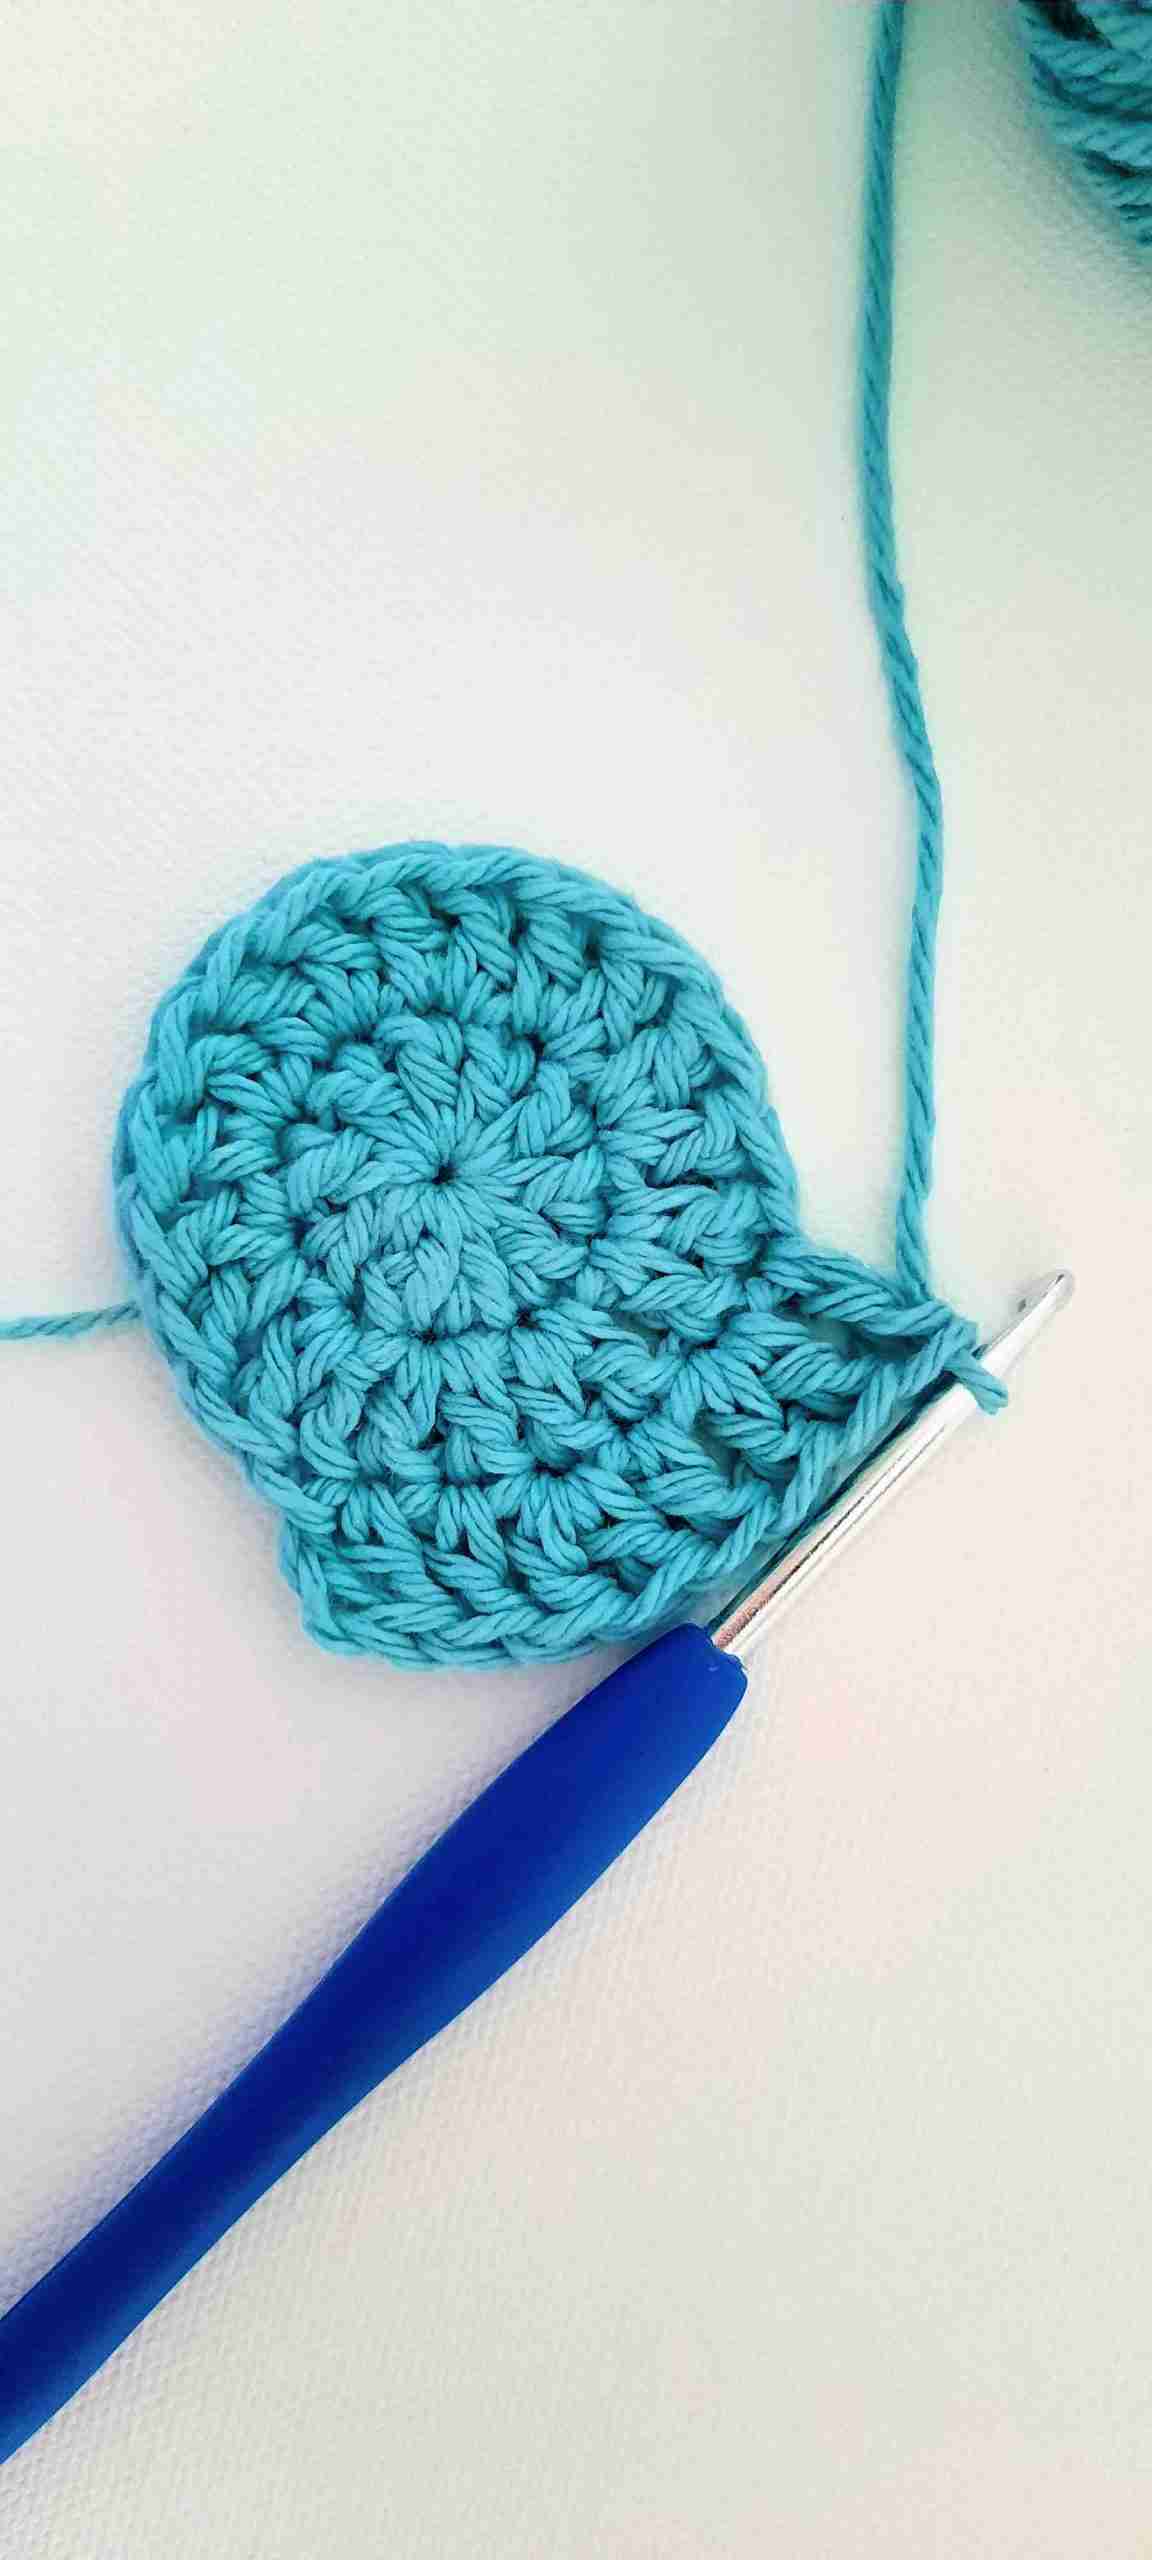 Coaster Crochet Pattern Free - Starting round 3